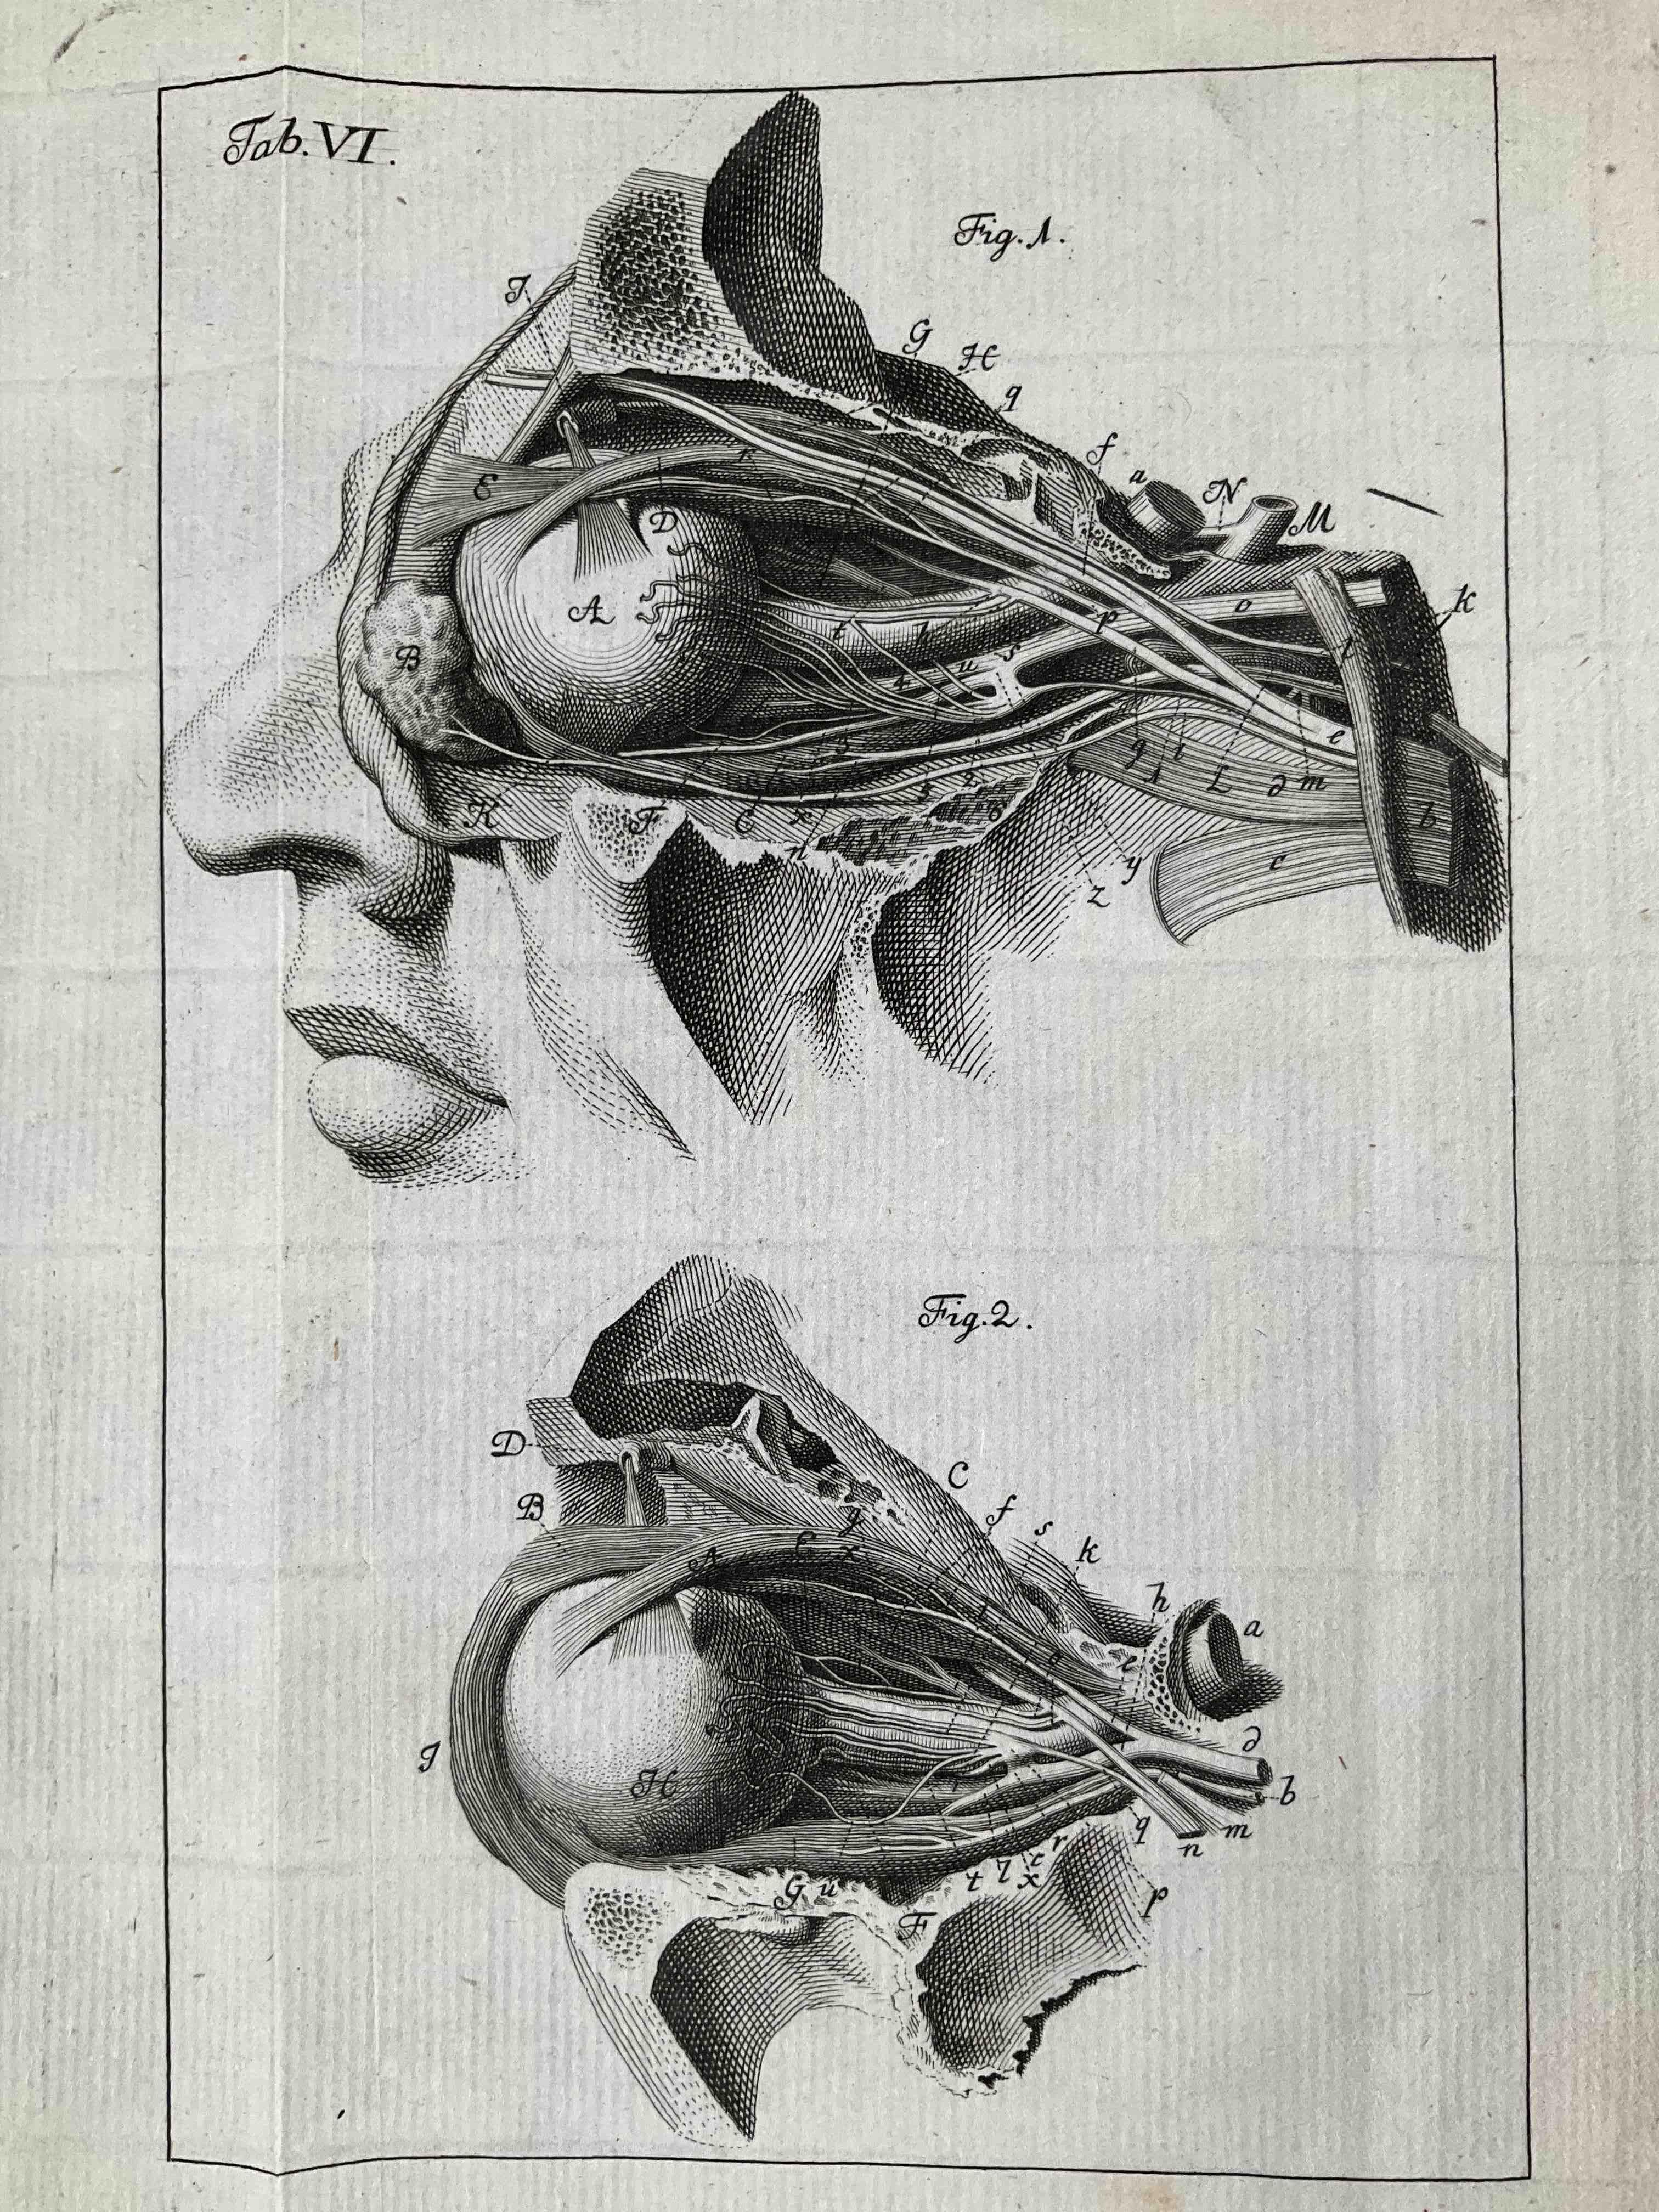 [Ophtalmologie] Johann Gottfried Zinn, Descriptio anatomica oculi humani iconibus illustrata.
Göttingen,...